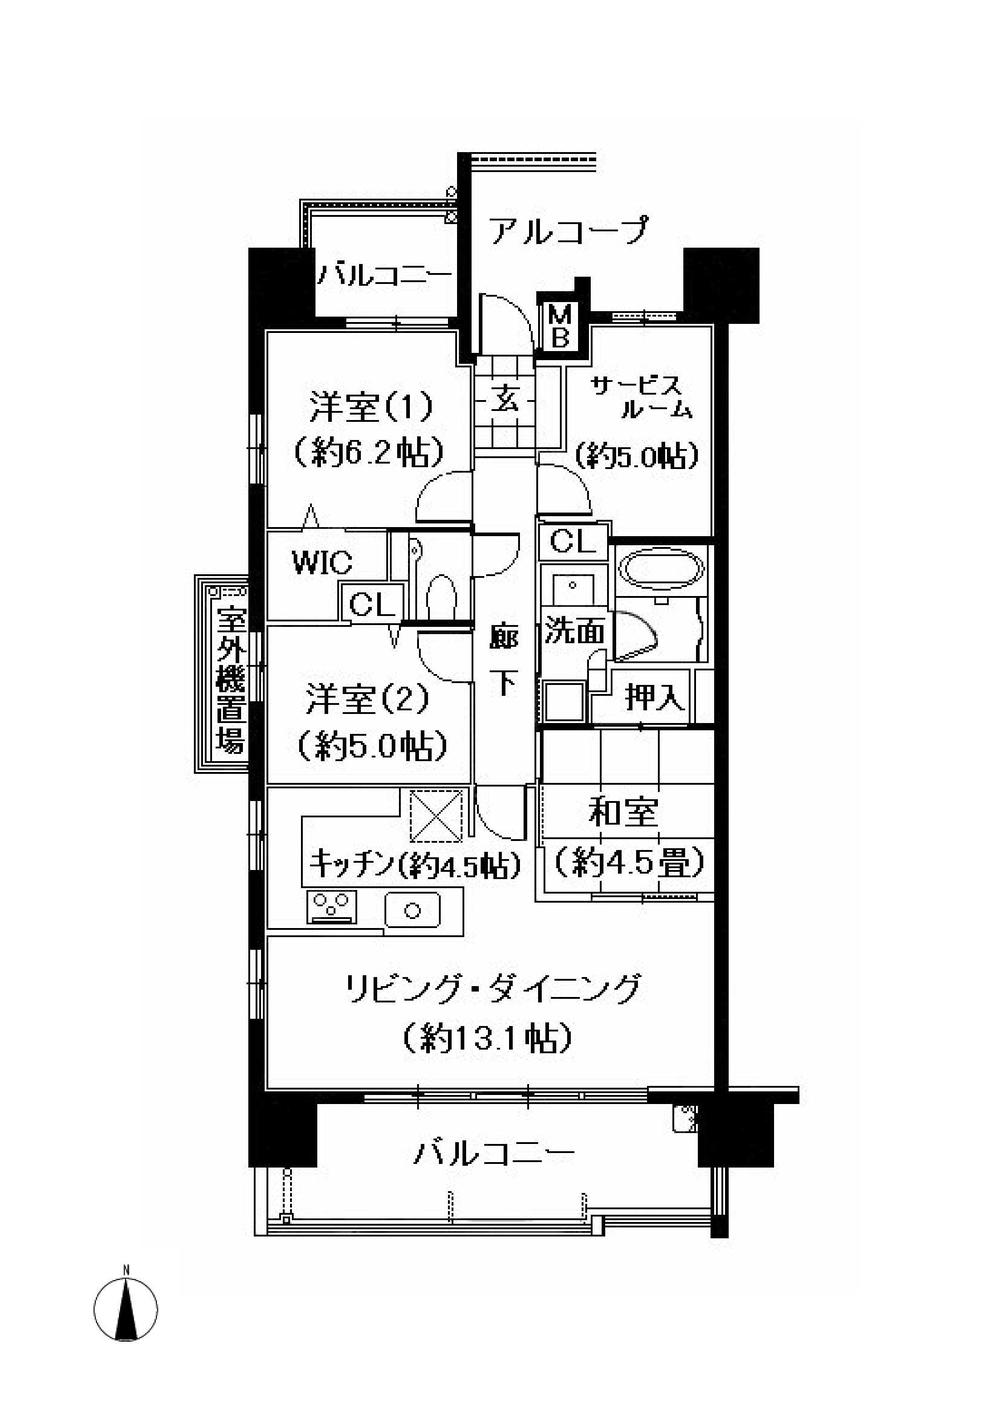 Floor plan. 3LDK + S (storeroom), Price 26 million yen, Occupied area 82.38 sq m , Balcony area 18.03 sq m